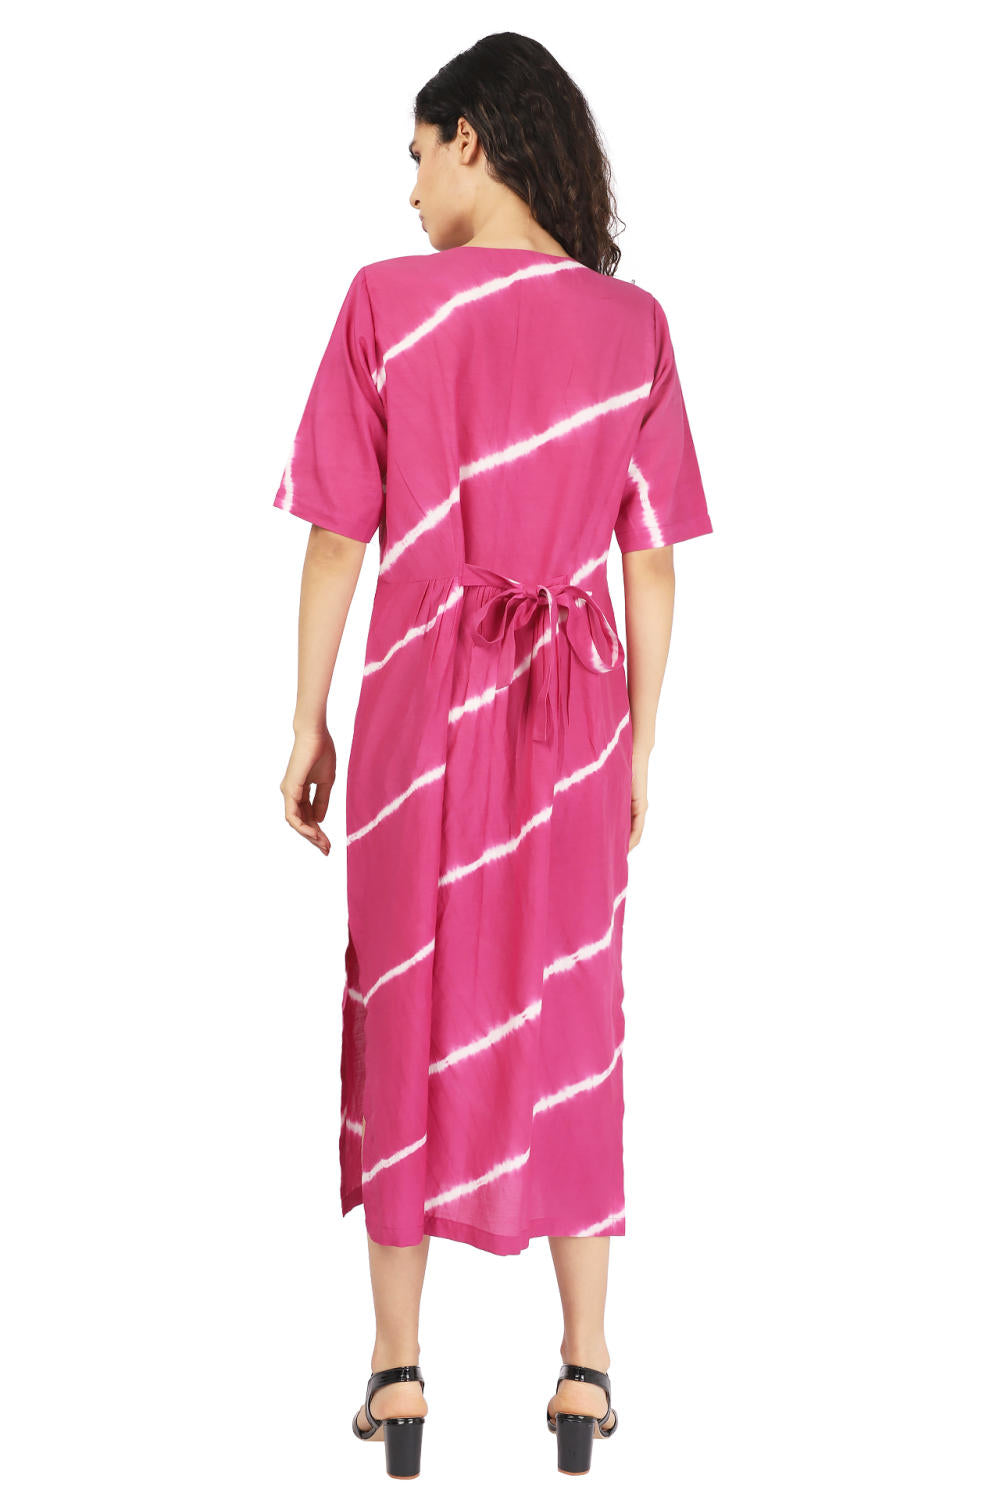 Pink Hand Done Shibori Dress Fashion The Pot Plant